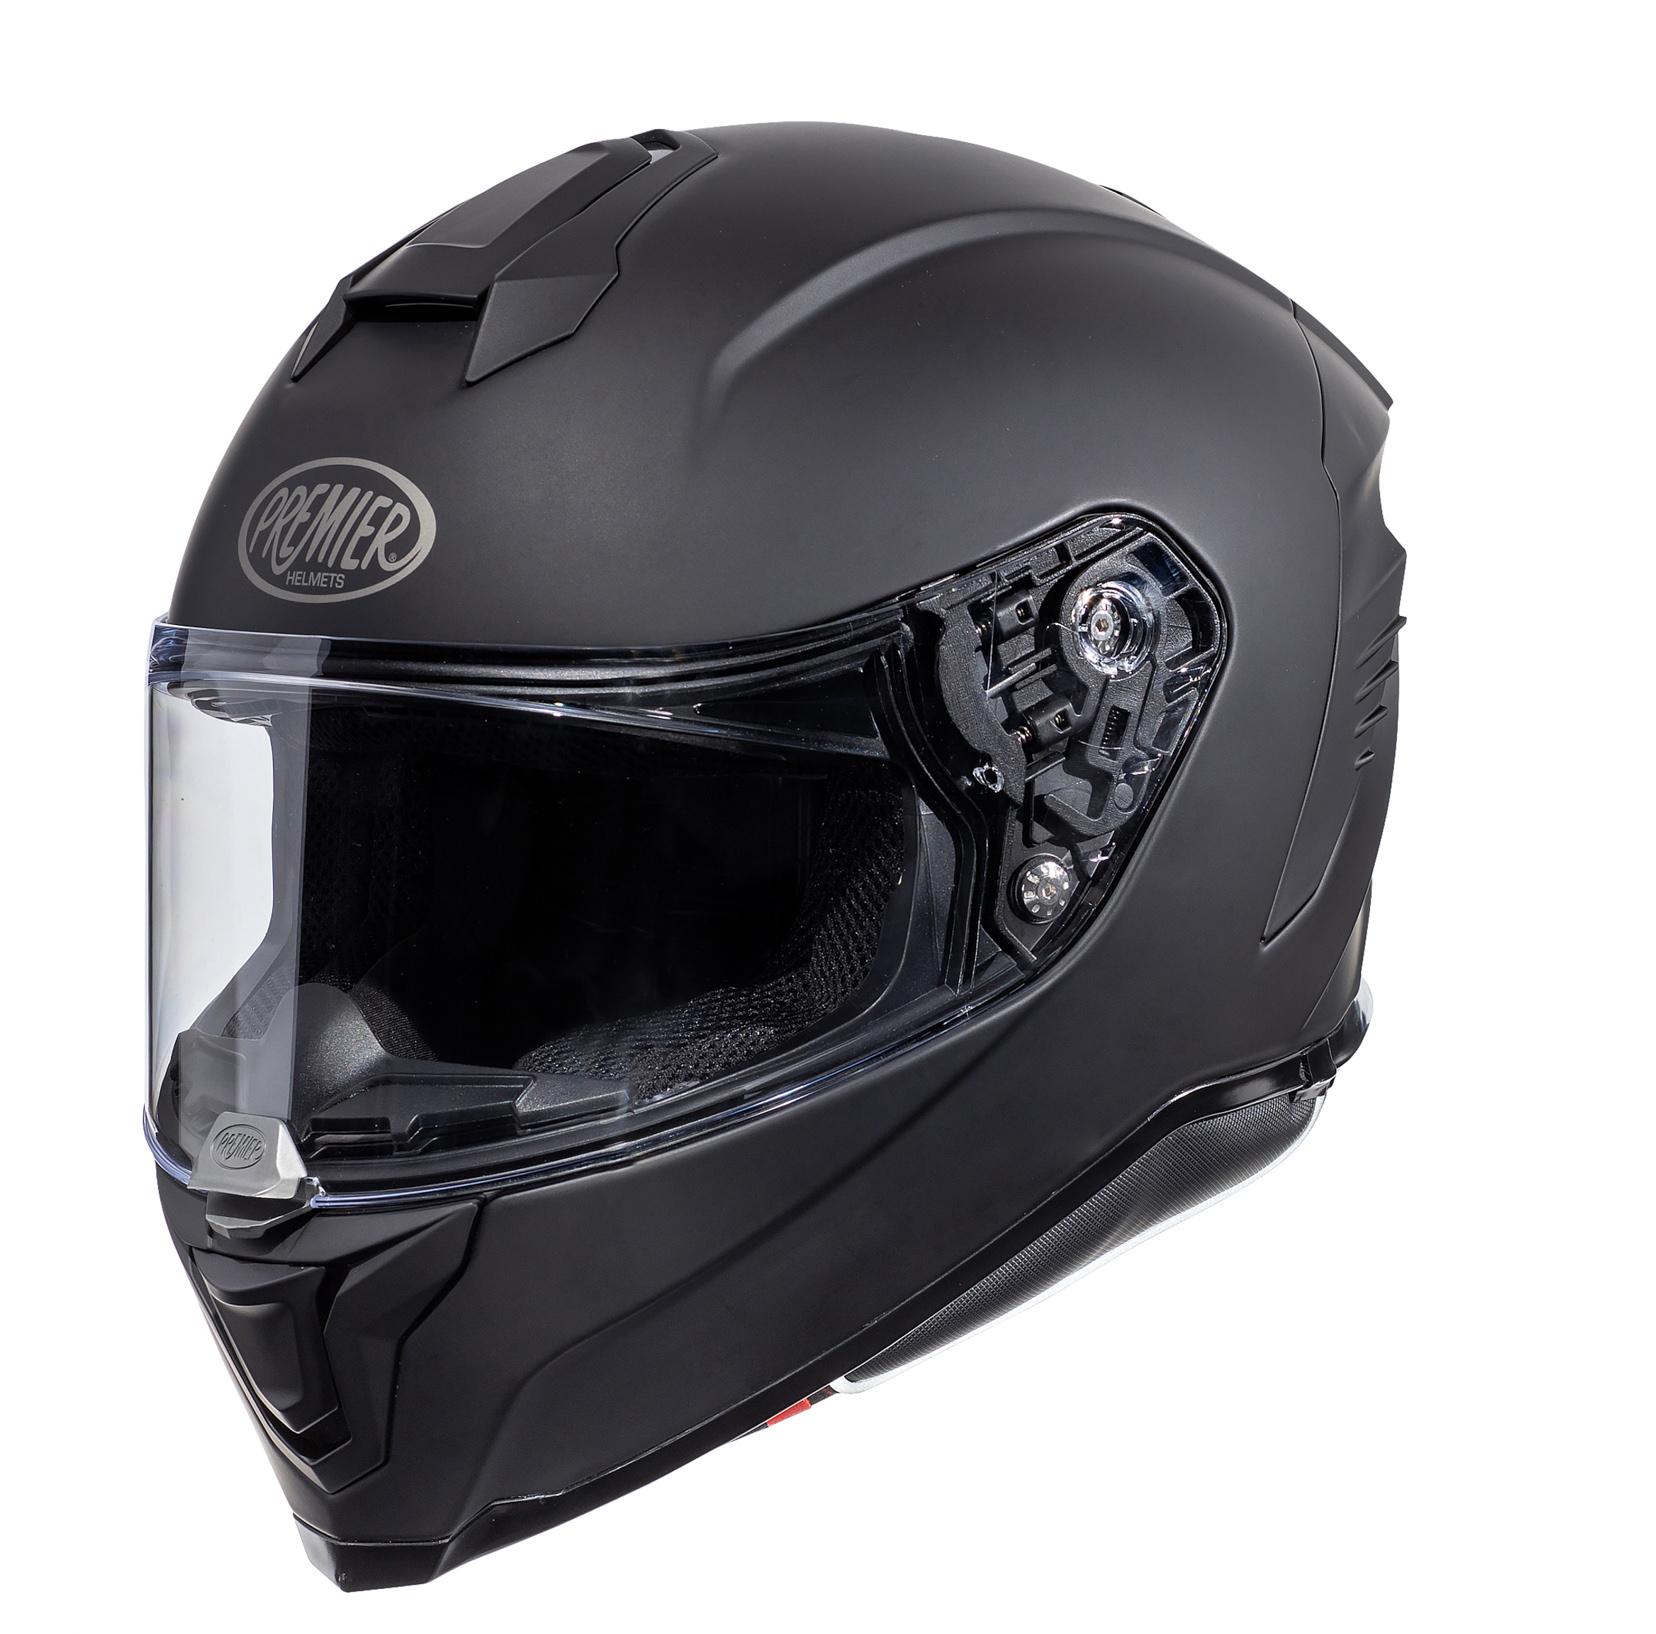 Premier Hyper Full Face Motorcycle Helmet - Matt Black, L